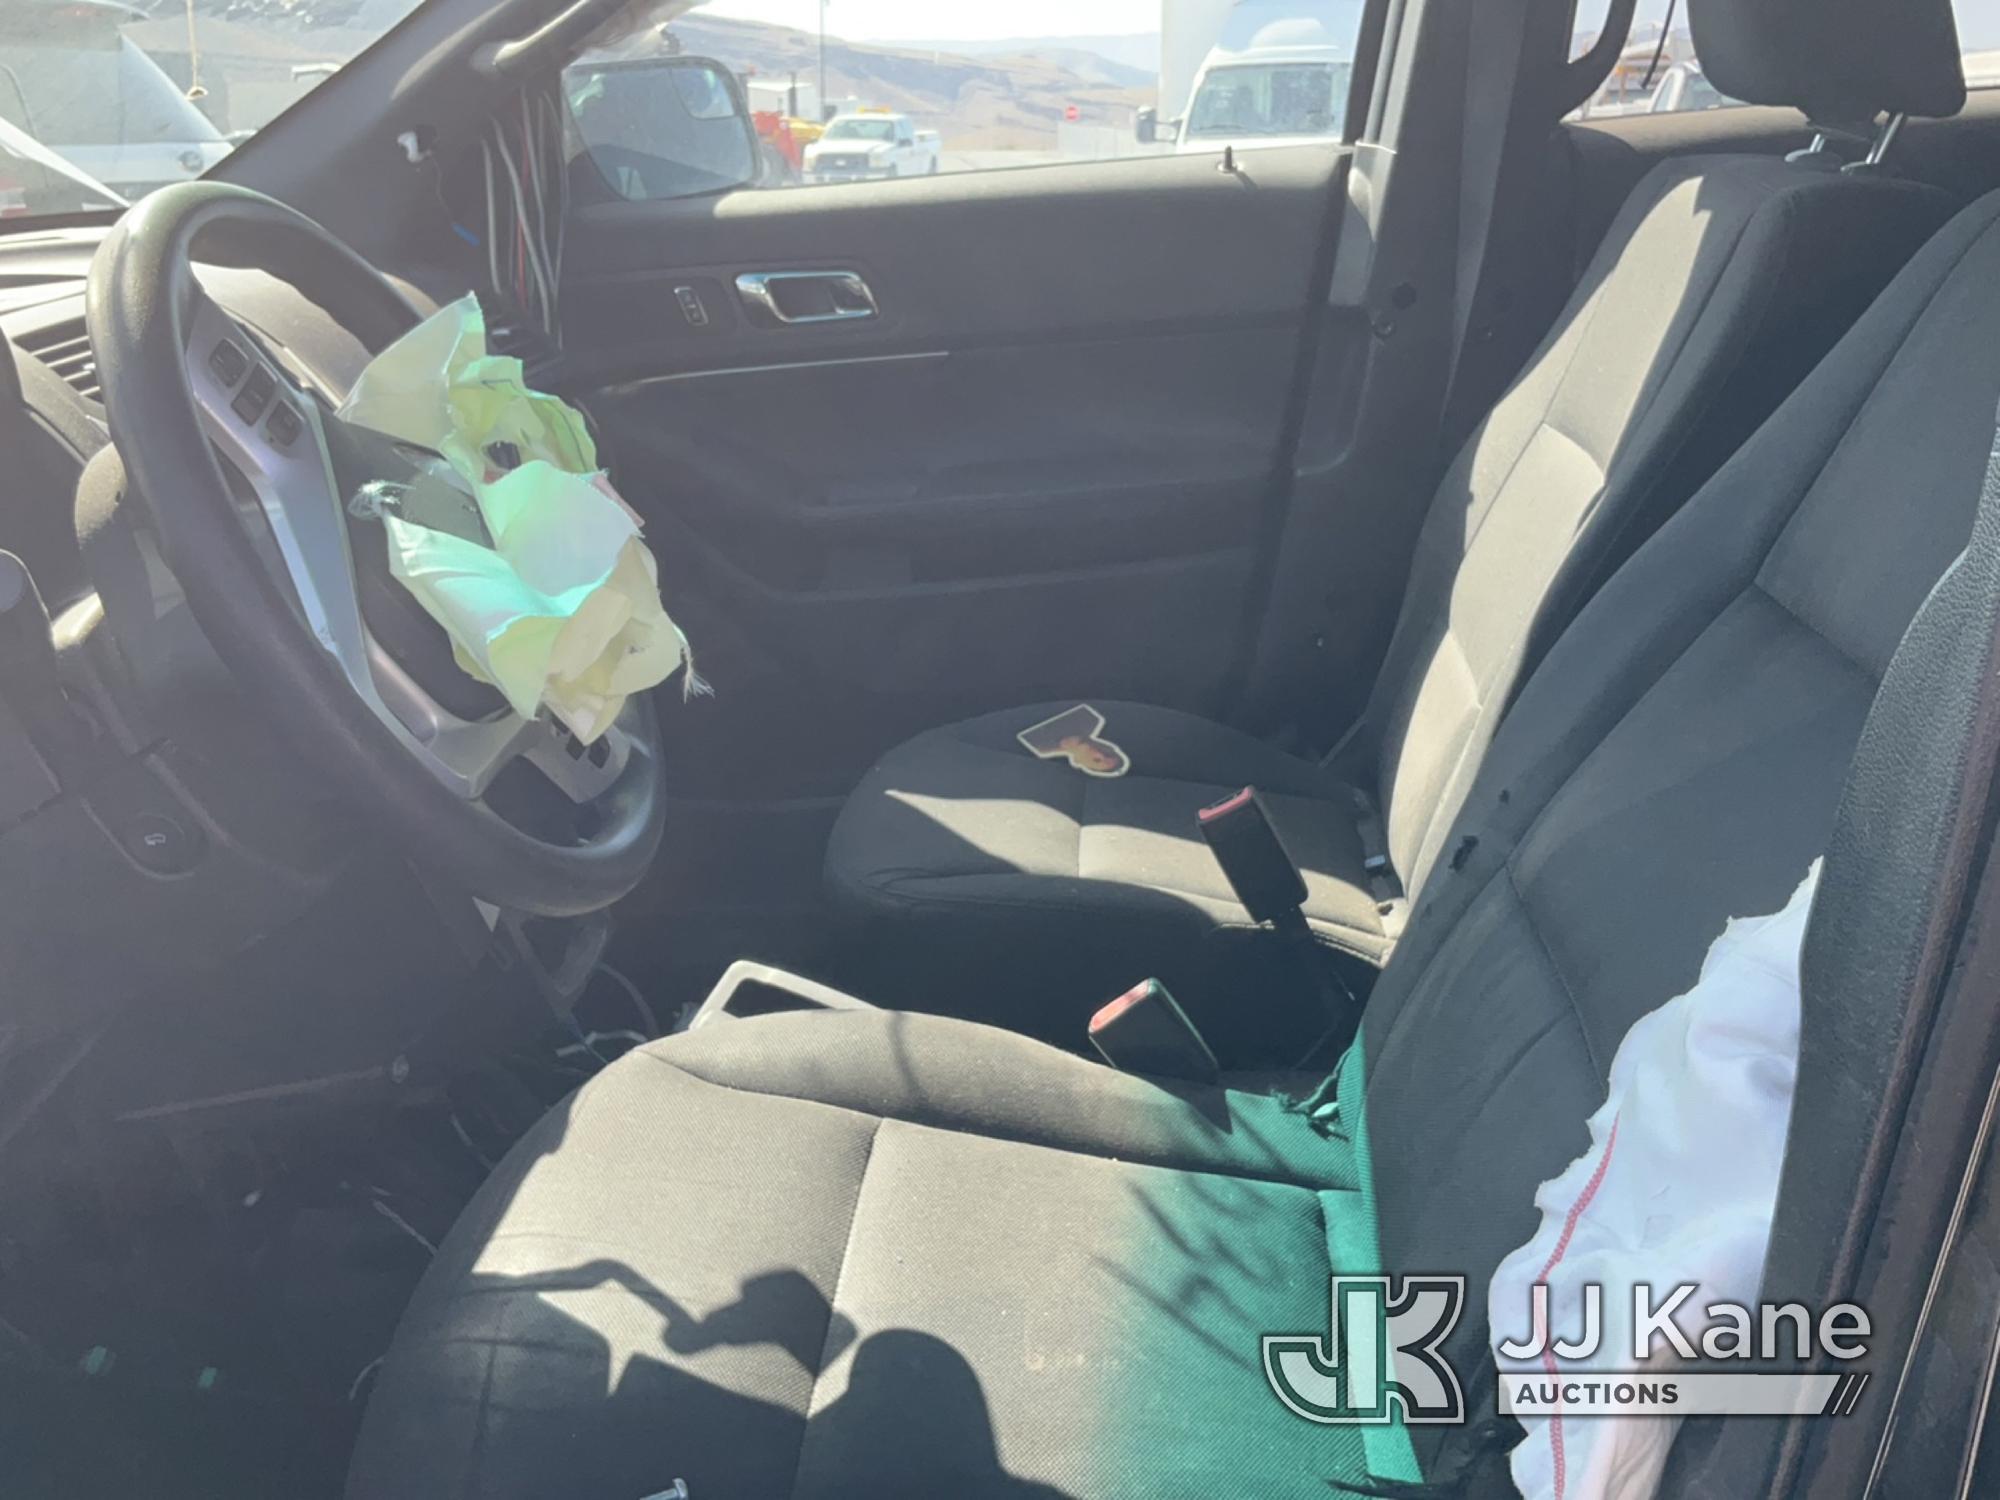 (Las Vegas, NV) 2015 Ford Explorer AWD Police Interceptor Dealers Only, Airbags Deployed, No Key